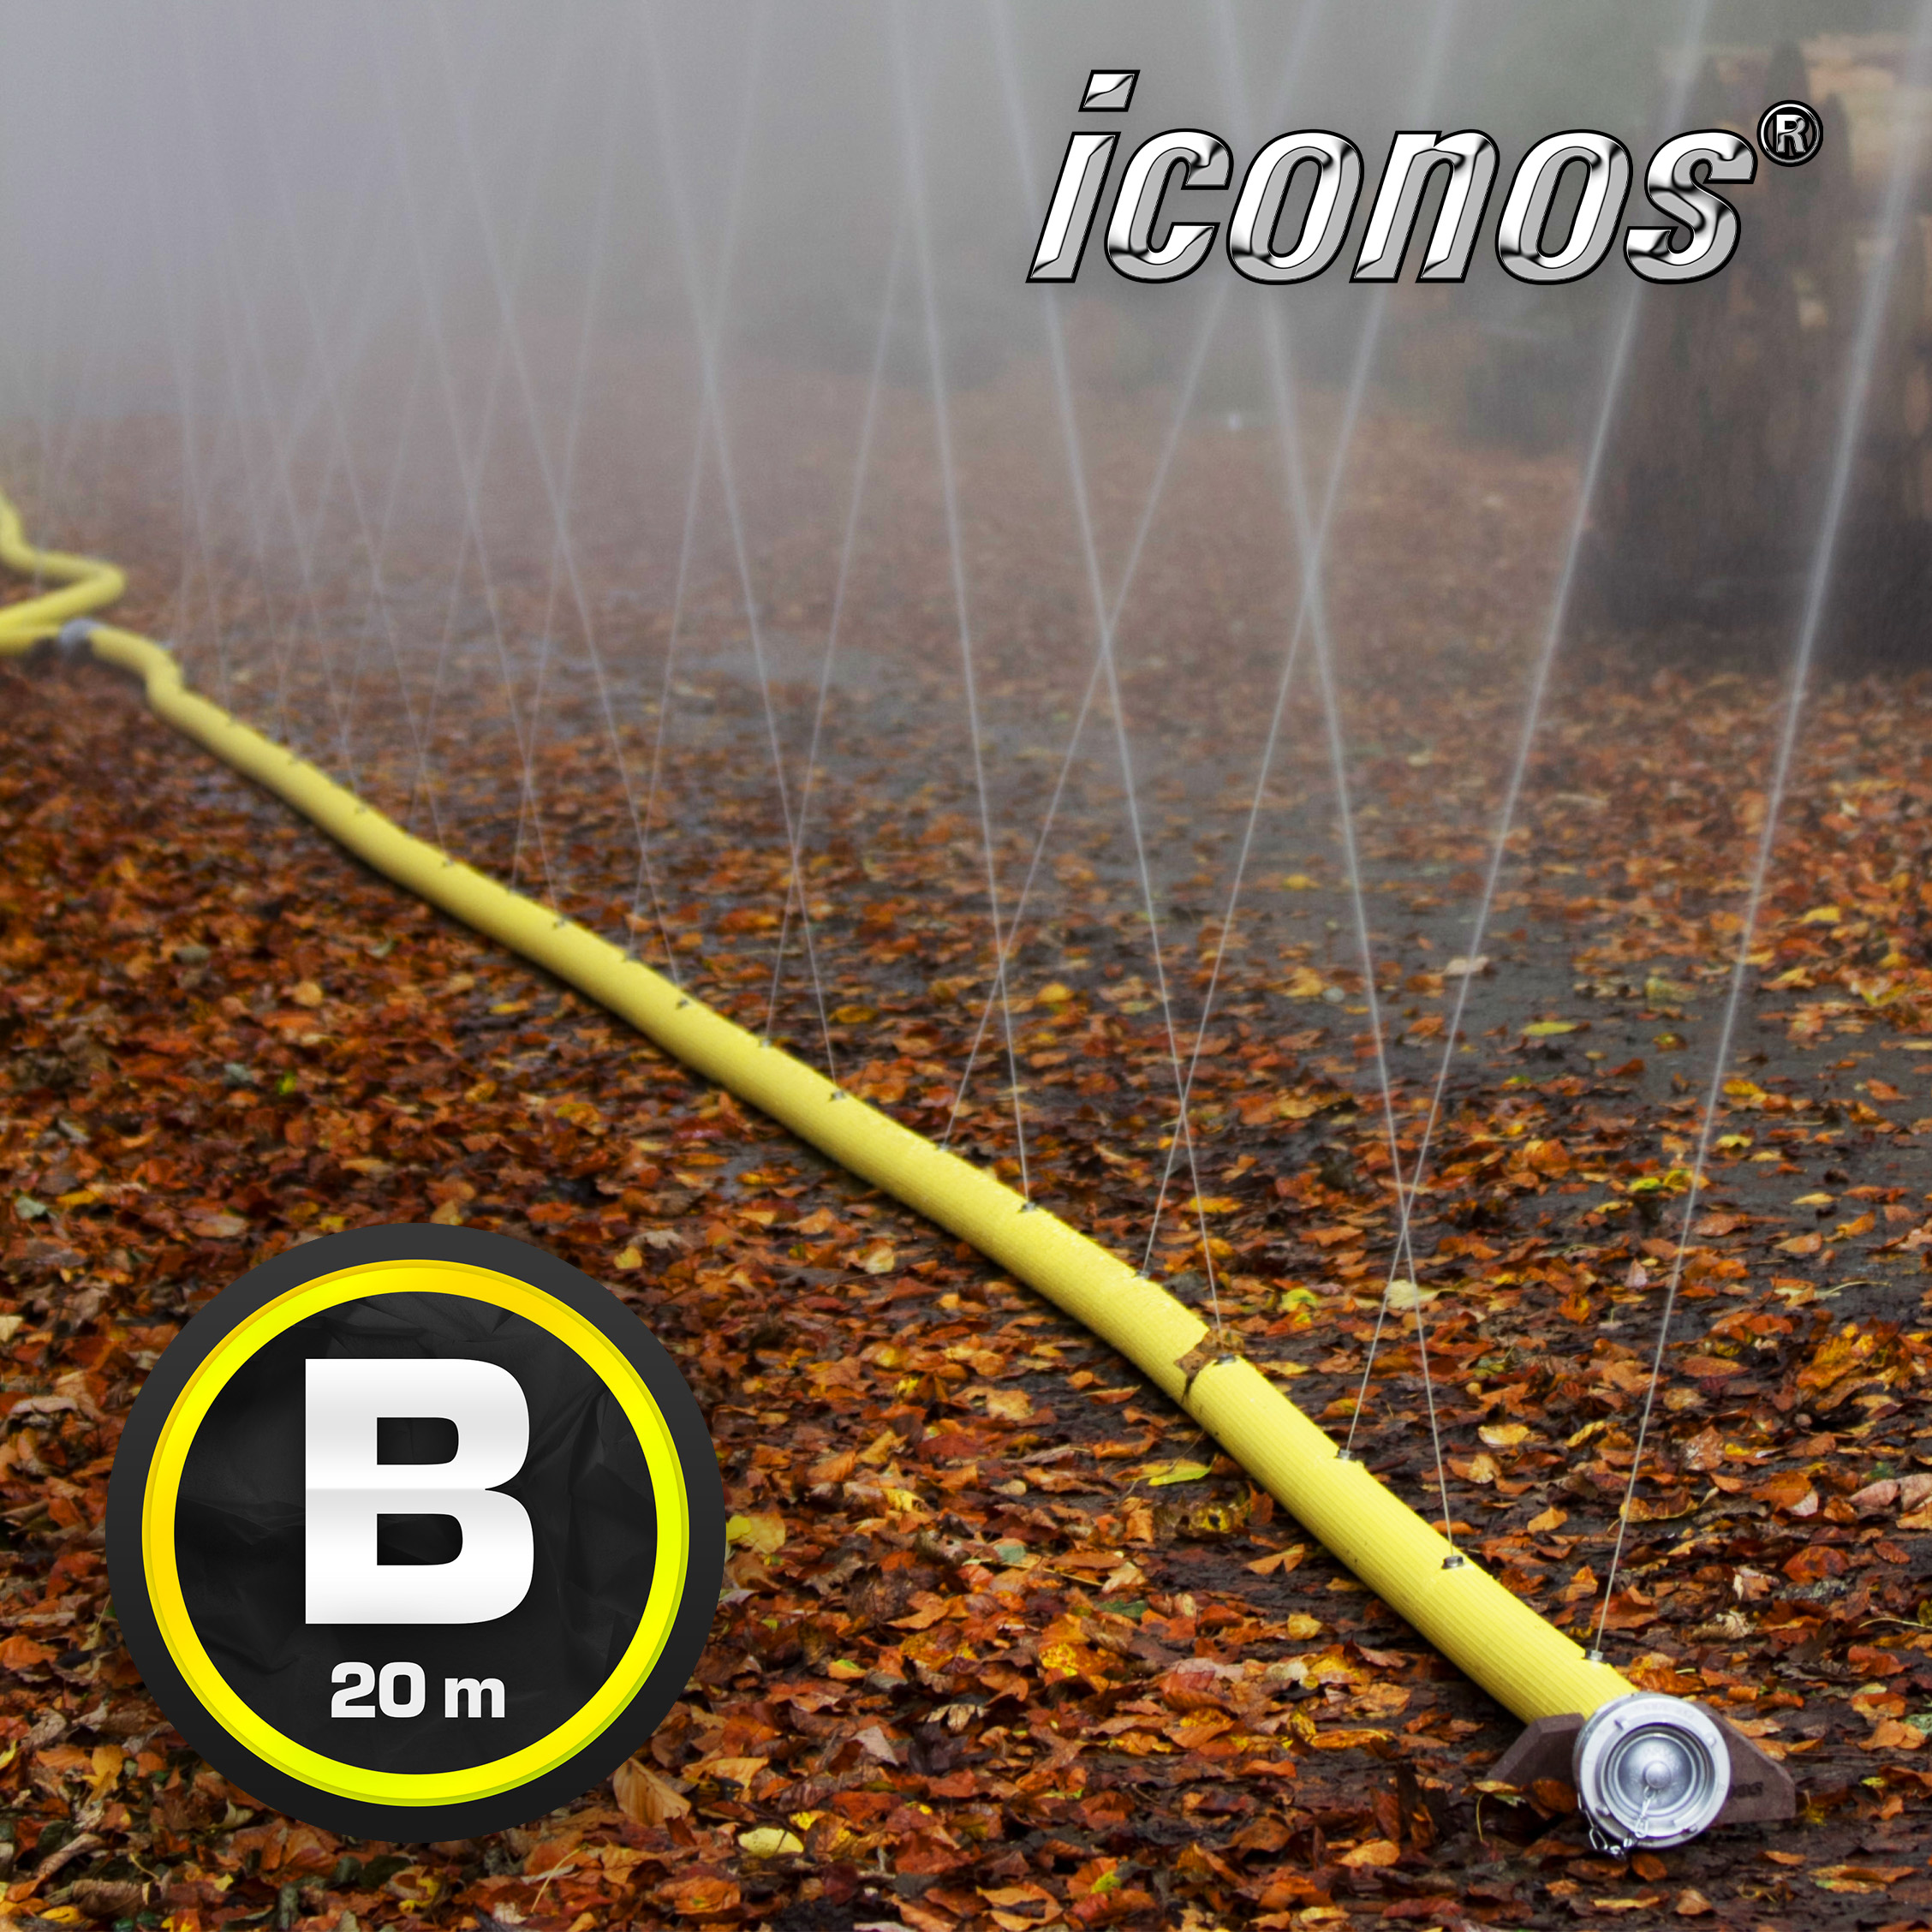 Clonová hadice ICONOS B75 20m